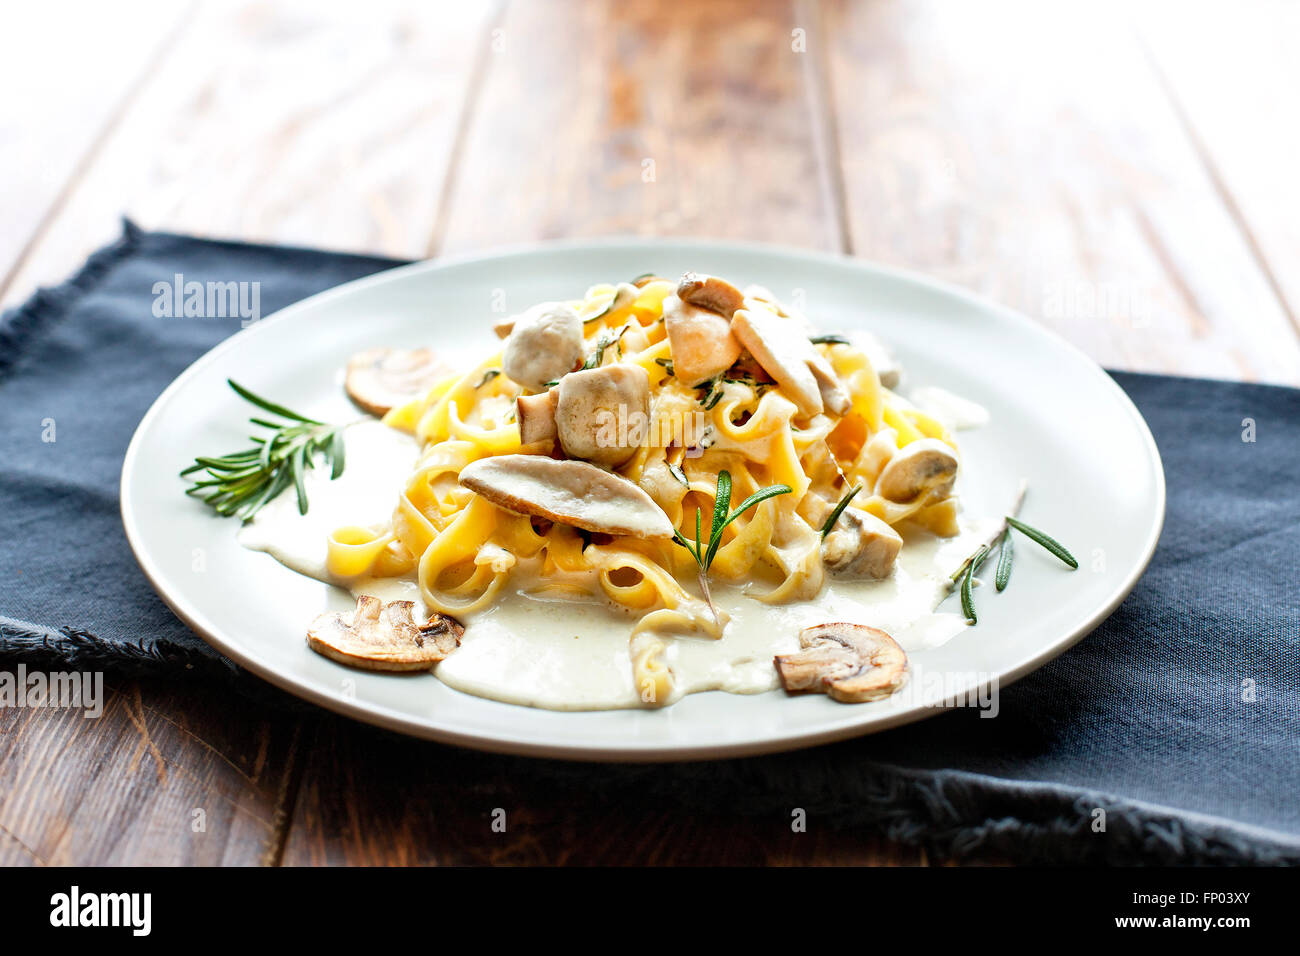 Tagliatelle vegetarian Pasta Dish with Mushrooms - Stock image Stock Photo